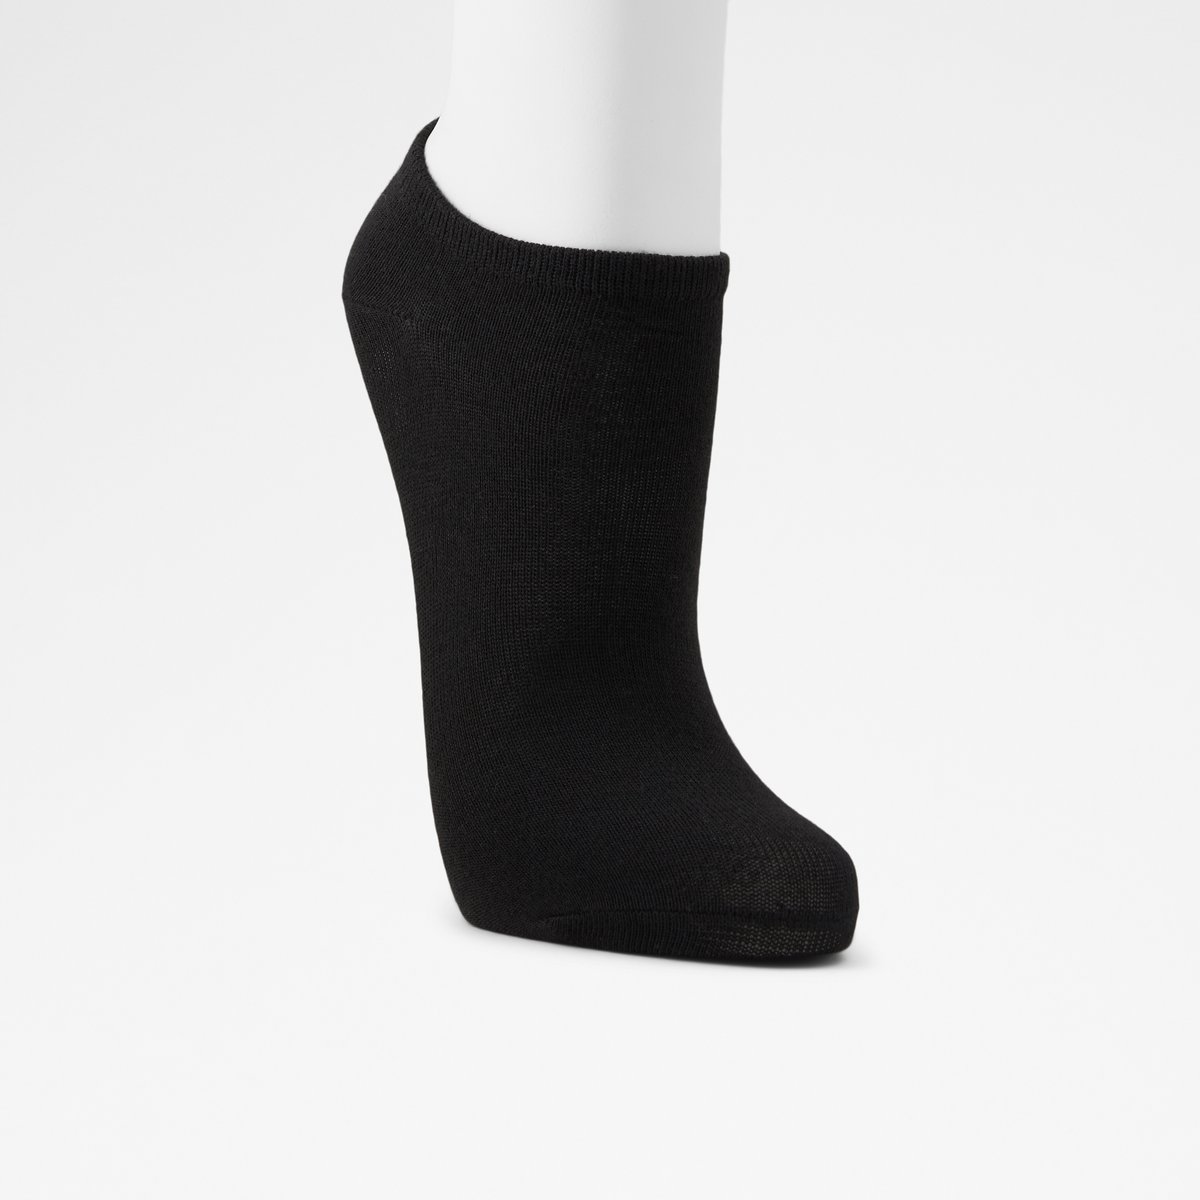 Albaennon Black Women's Socks | ALDO Canada